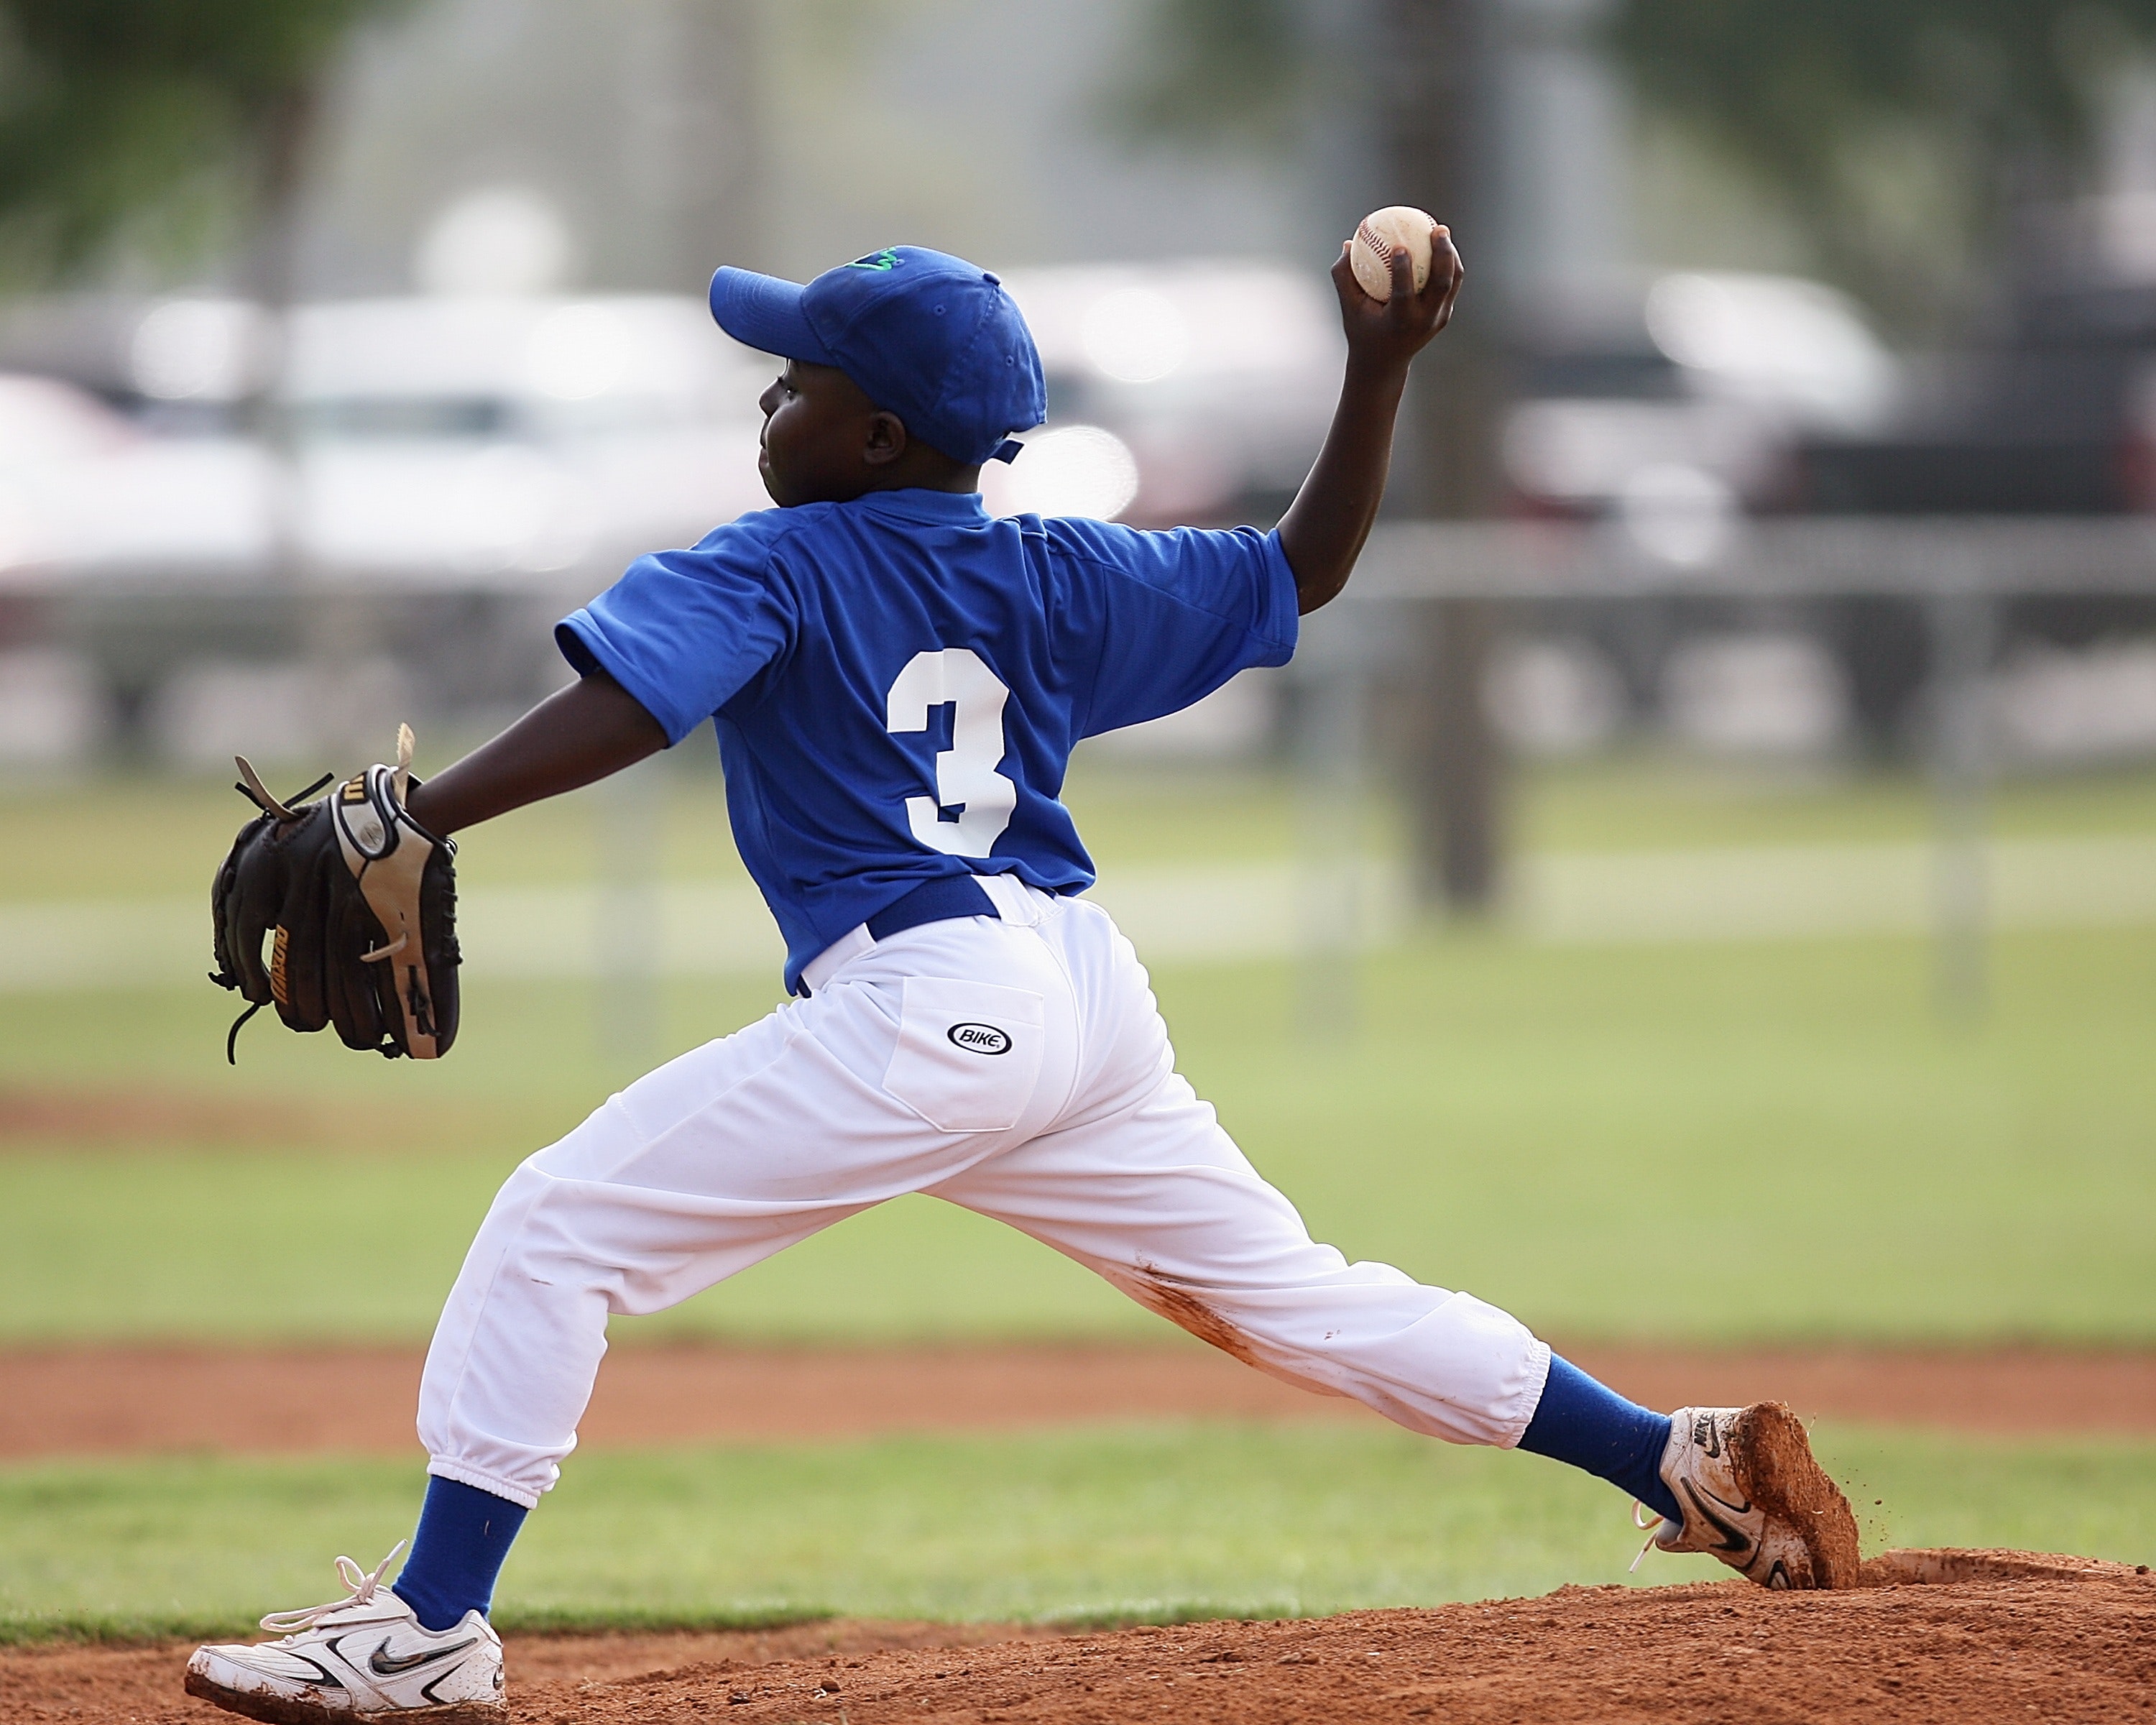 Boy wearing blue and white 3 jersey about to pitch a baseball photo